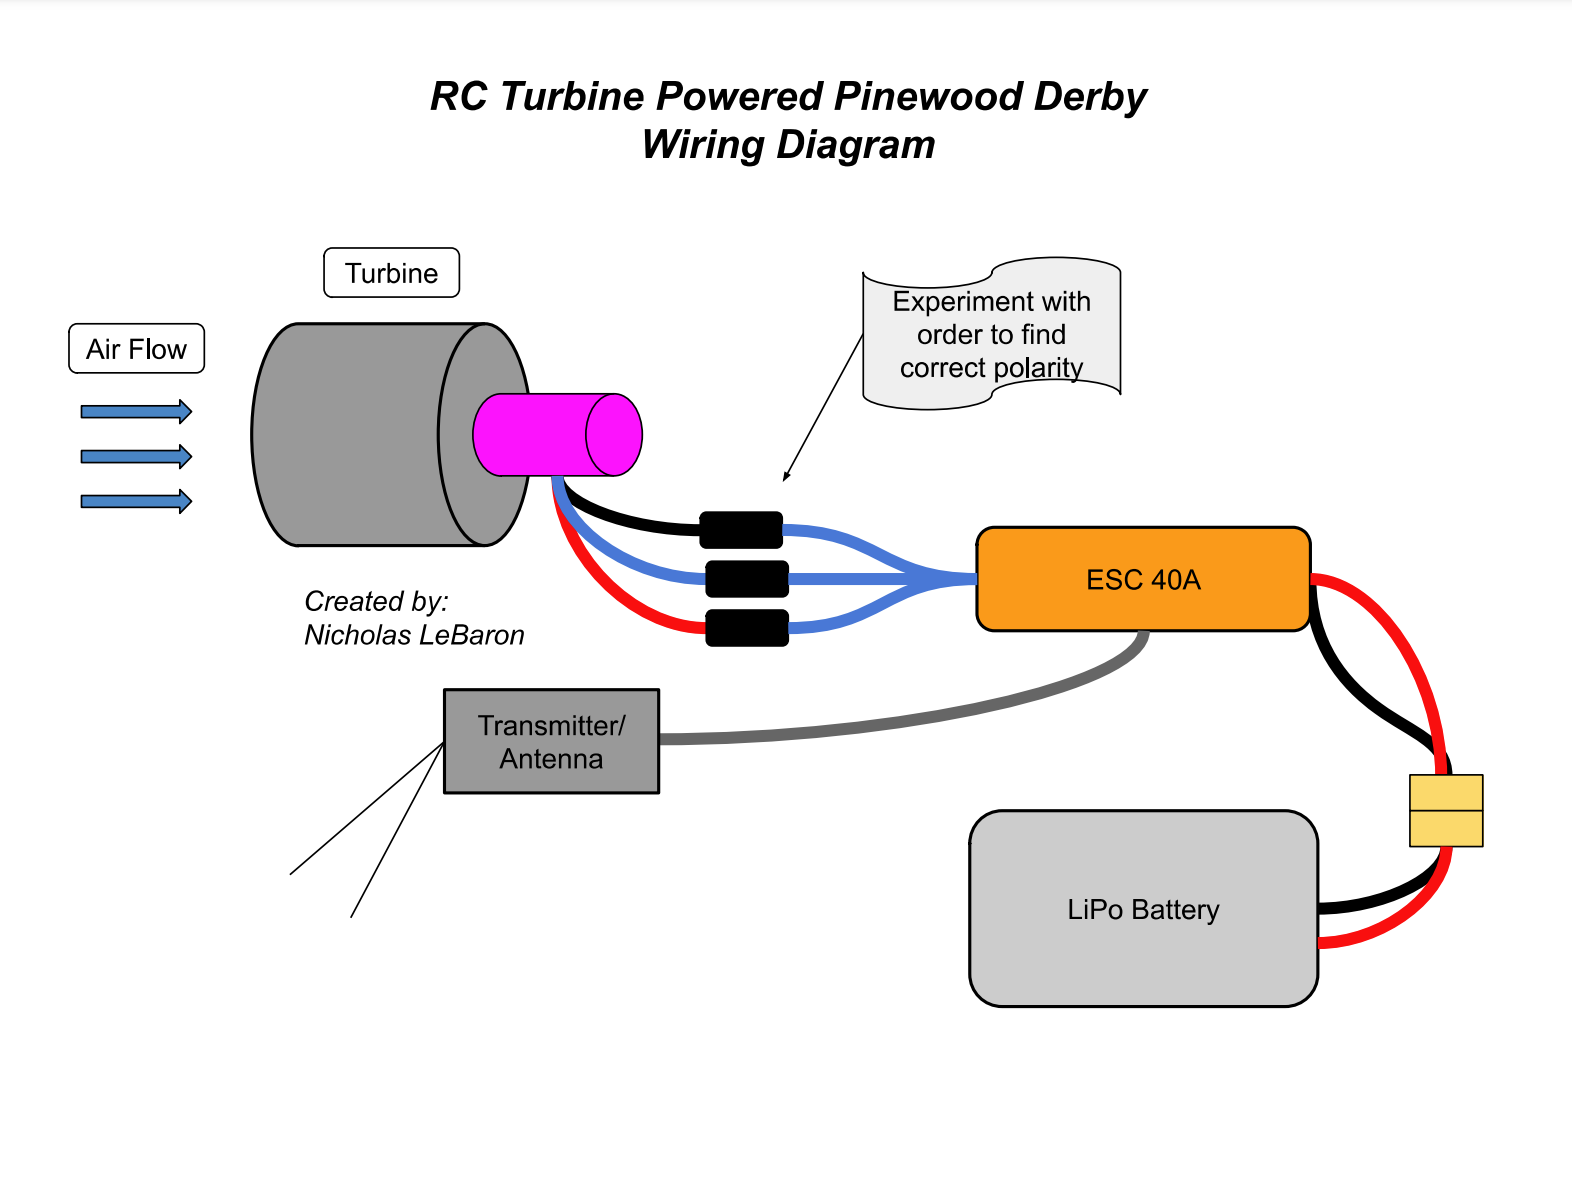 PD wiring diagram image.png